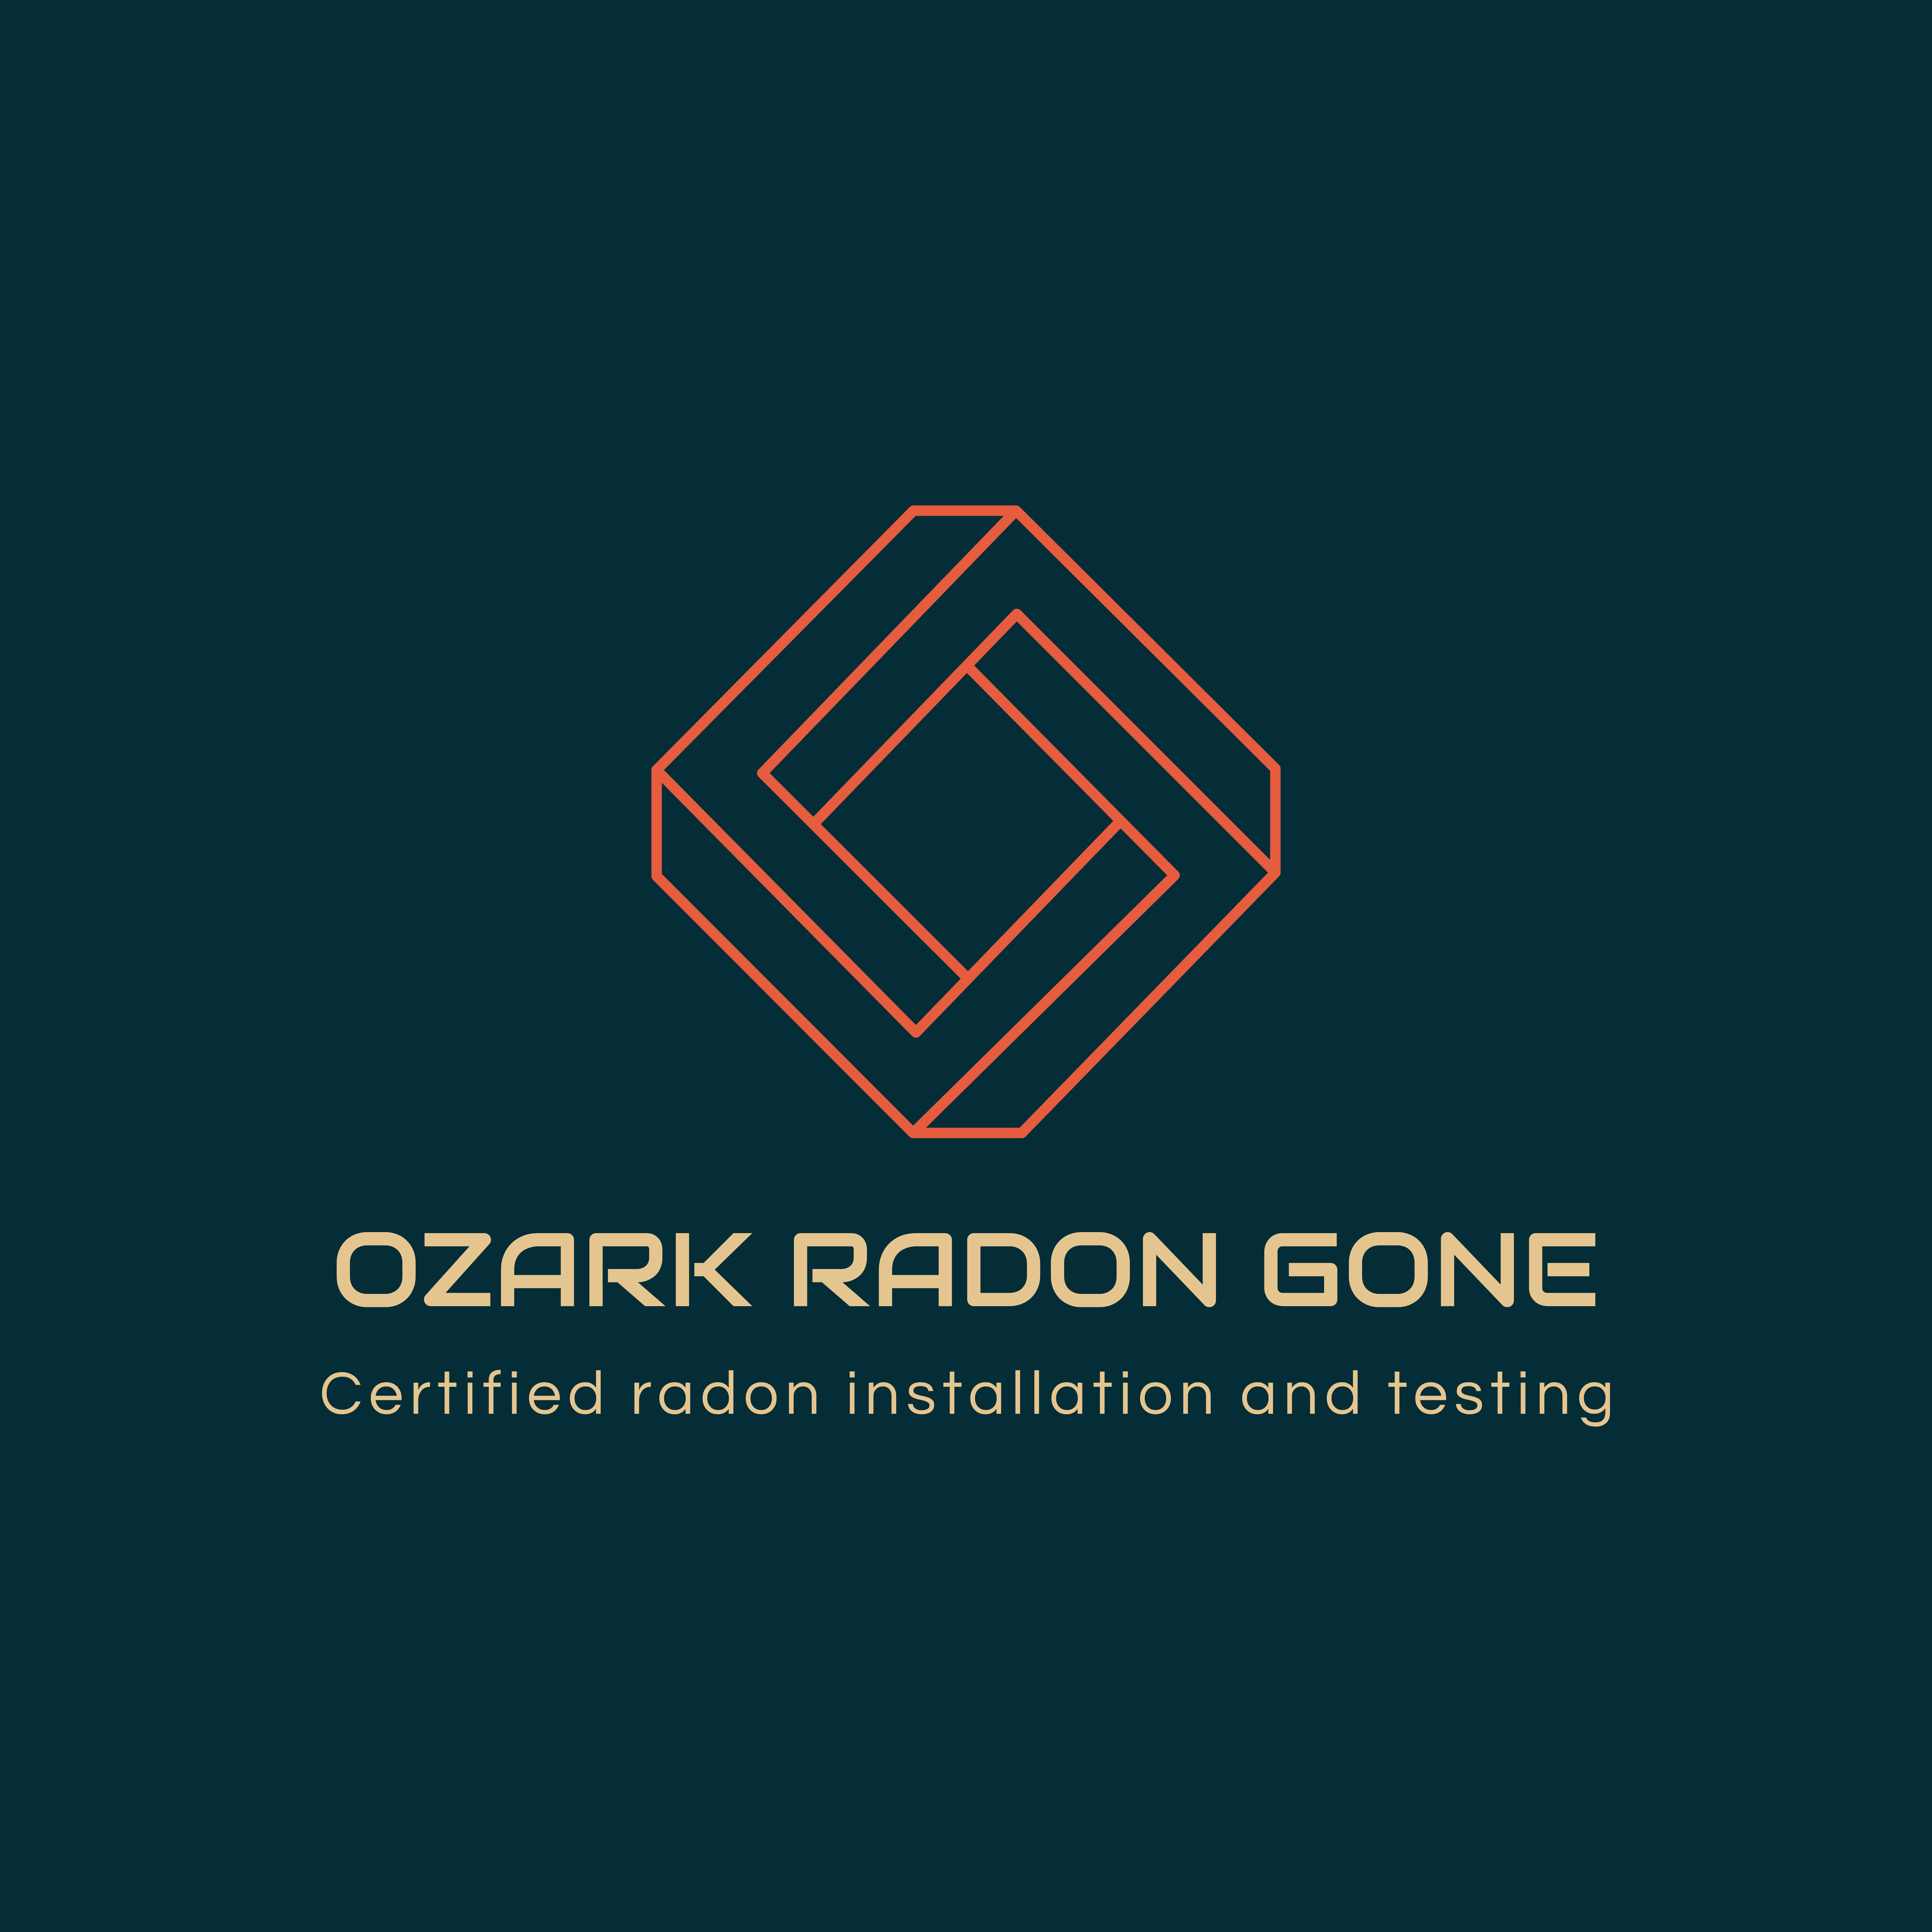 Ozark Radon Gone Corp. Logo